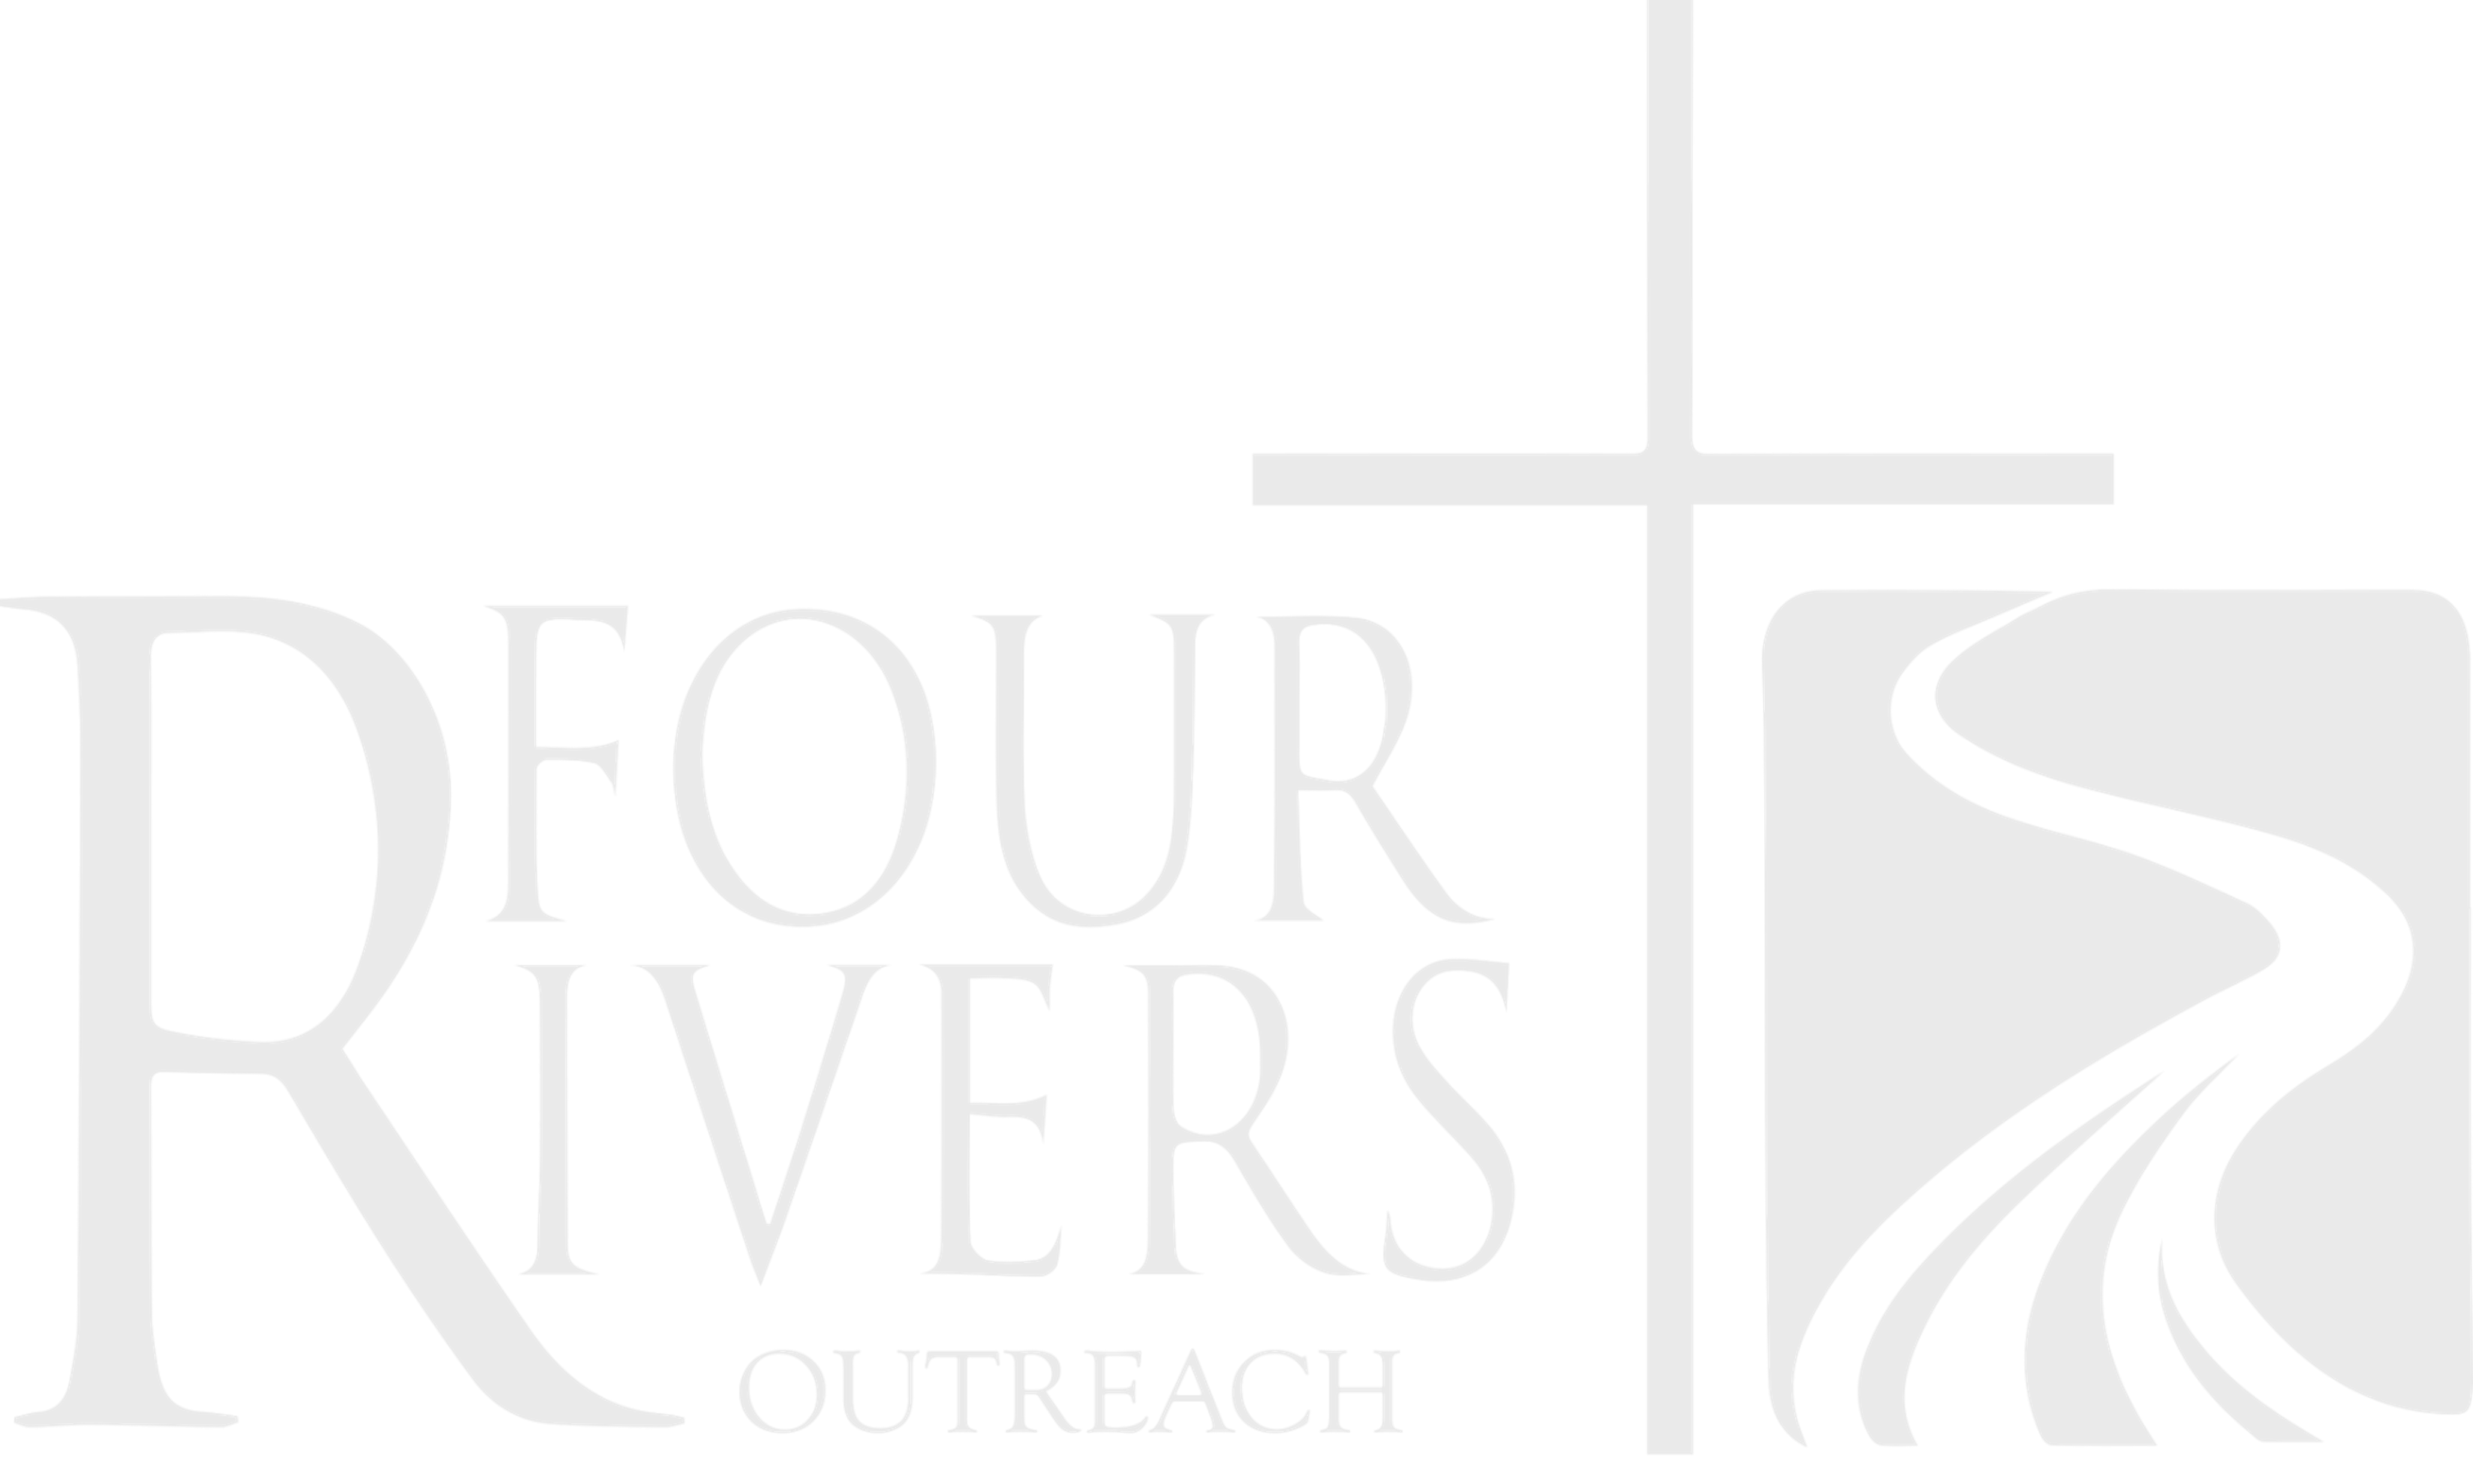 Four Rivers Outreach